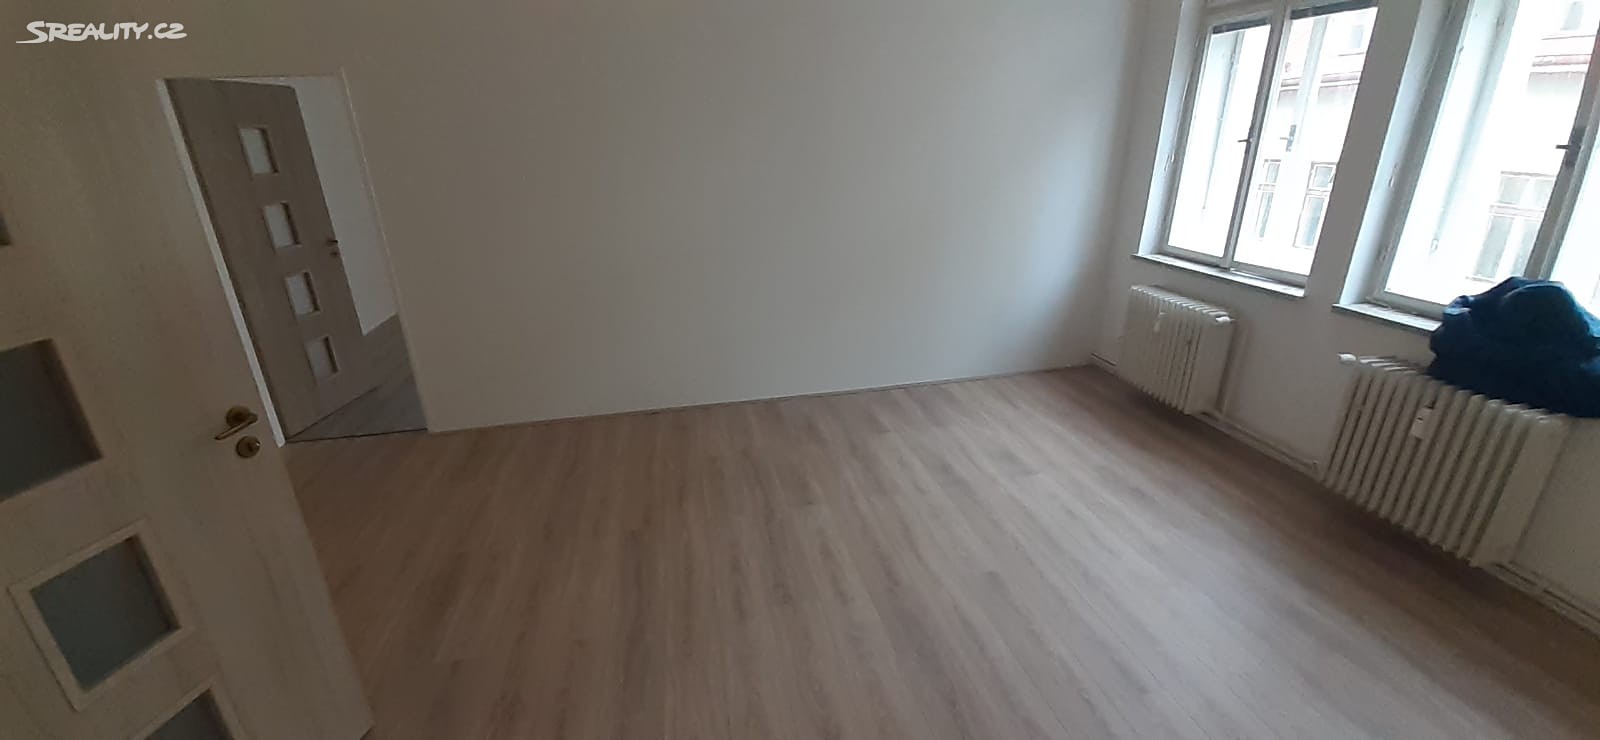 Pronájem bytu 2+1 62 m², Pražská, Liberec - Liberec III-Jeřáb